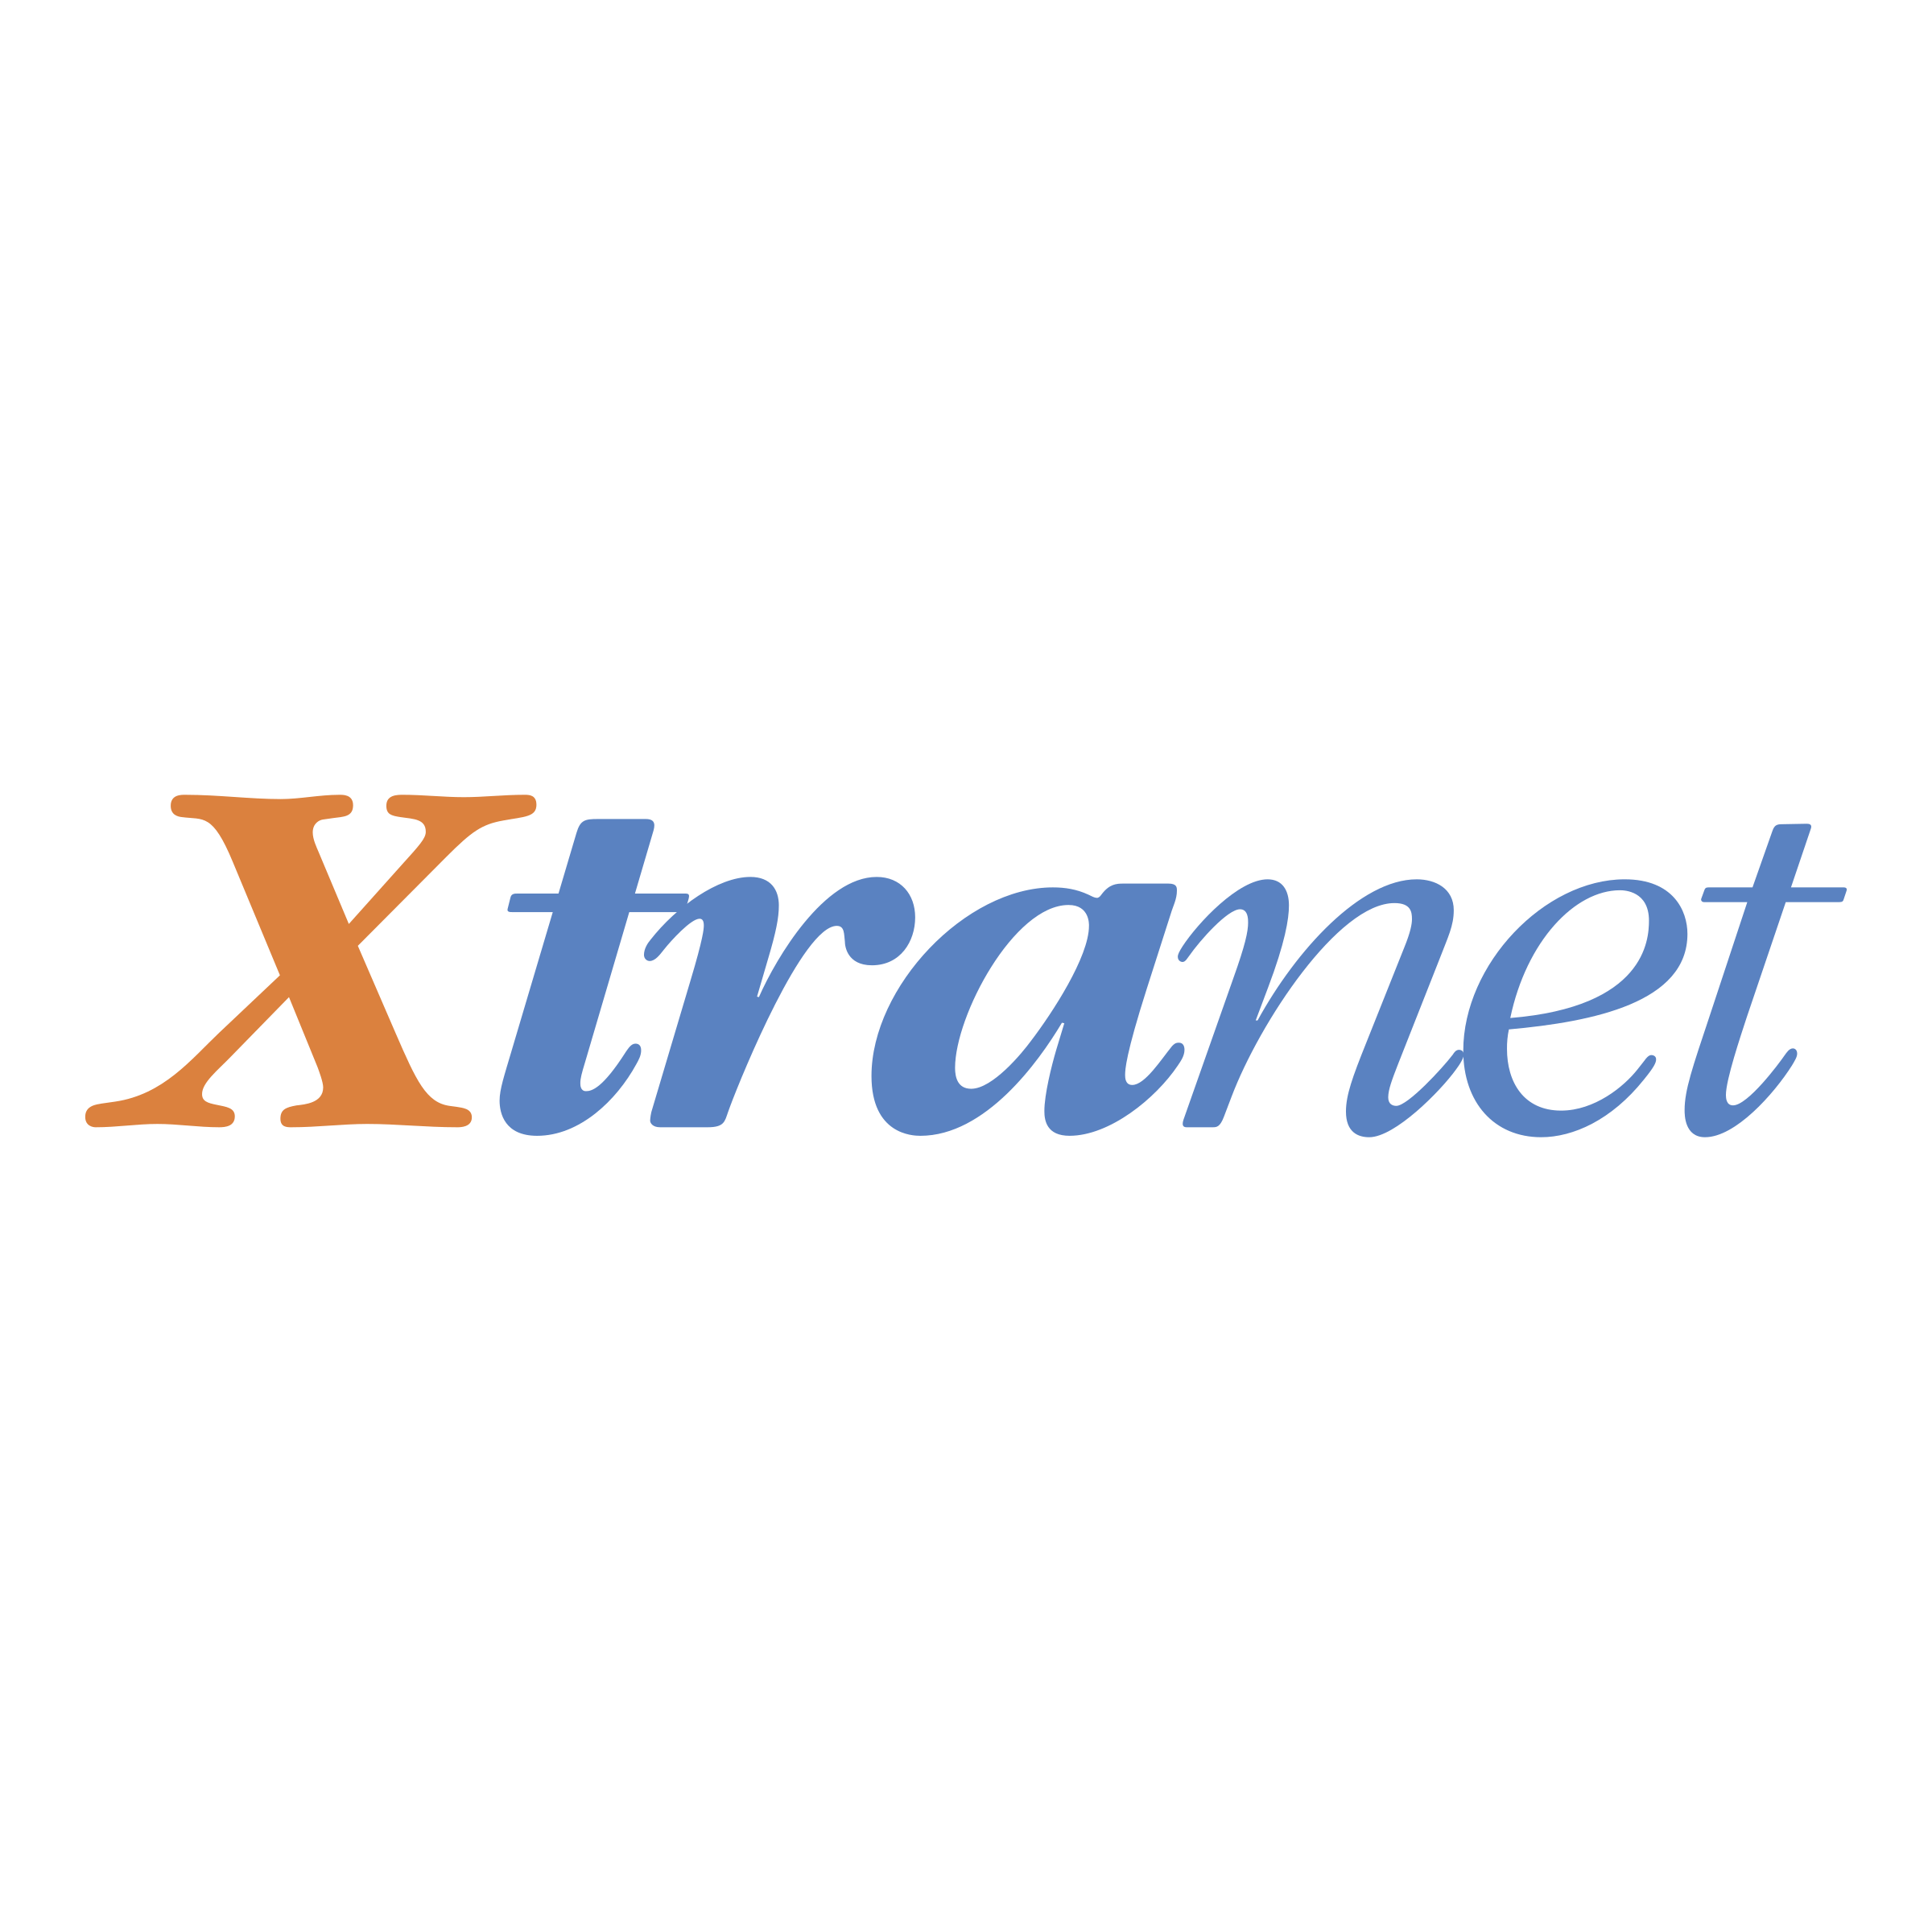 Xenova Logo - XTranet Logo PNG Transparent & SVG Vector